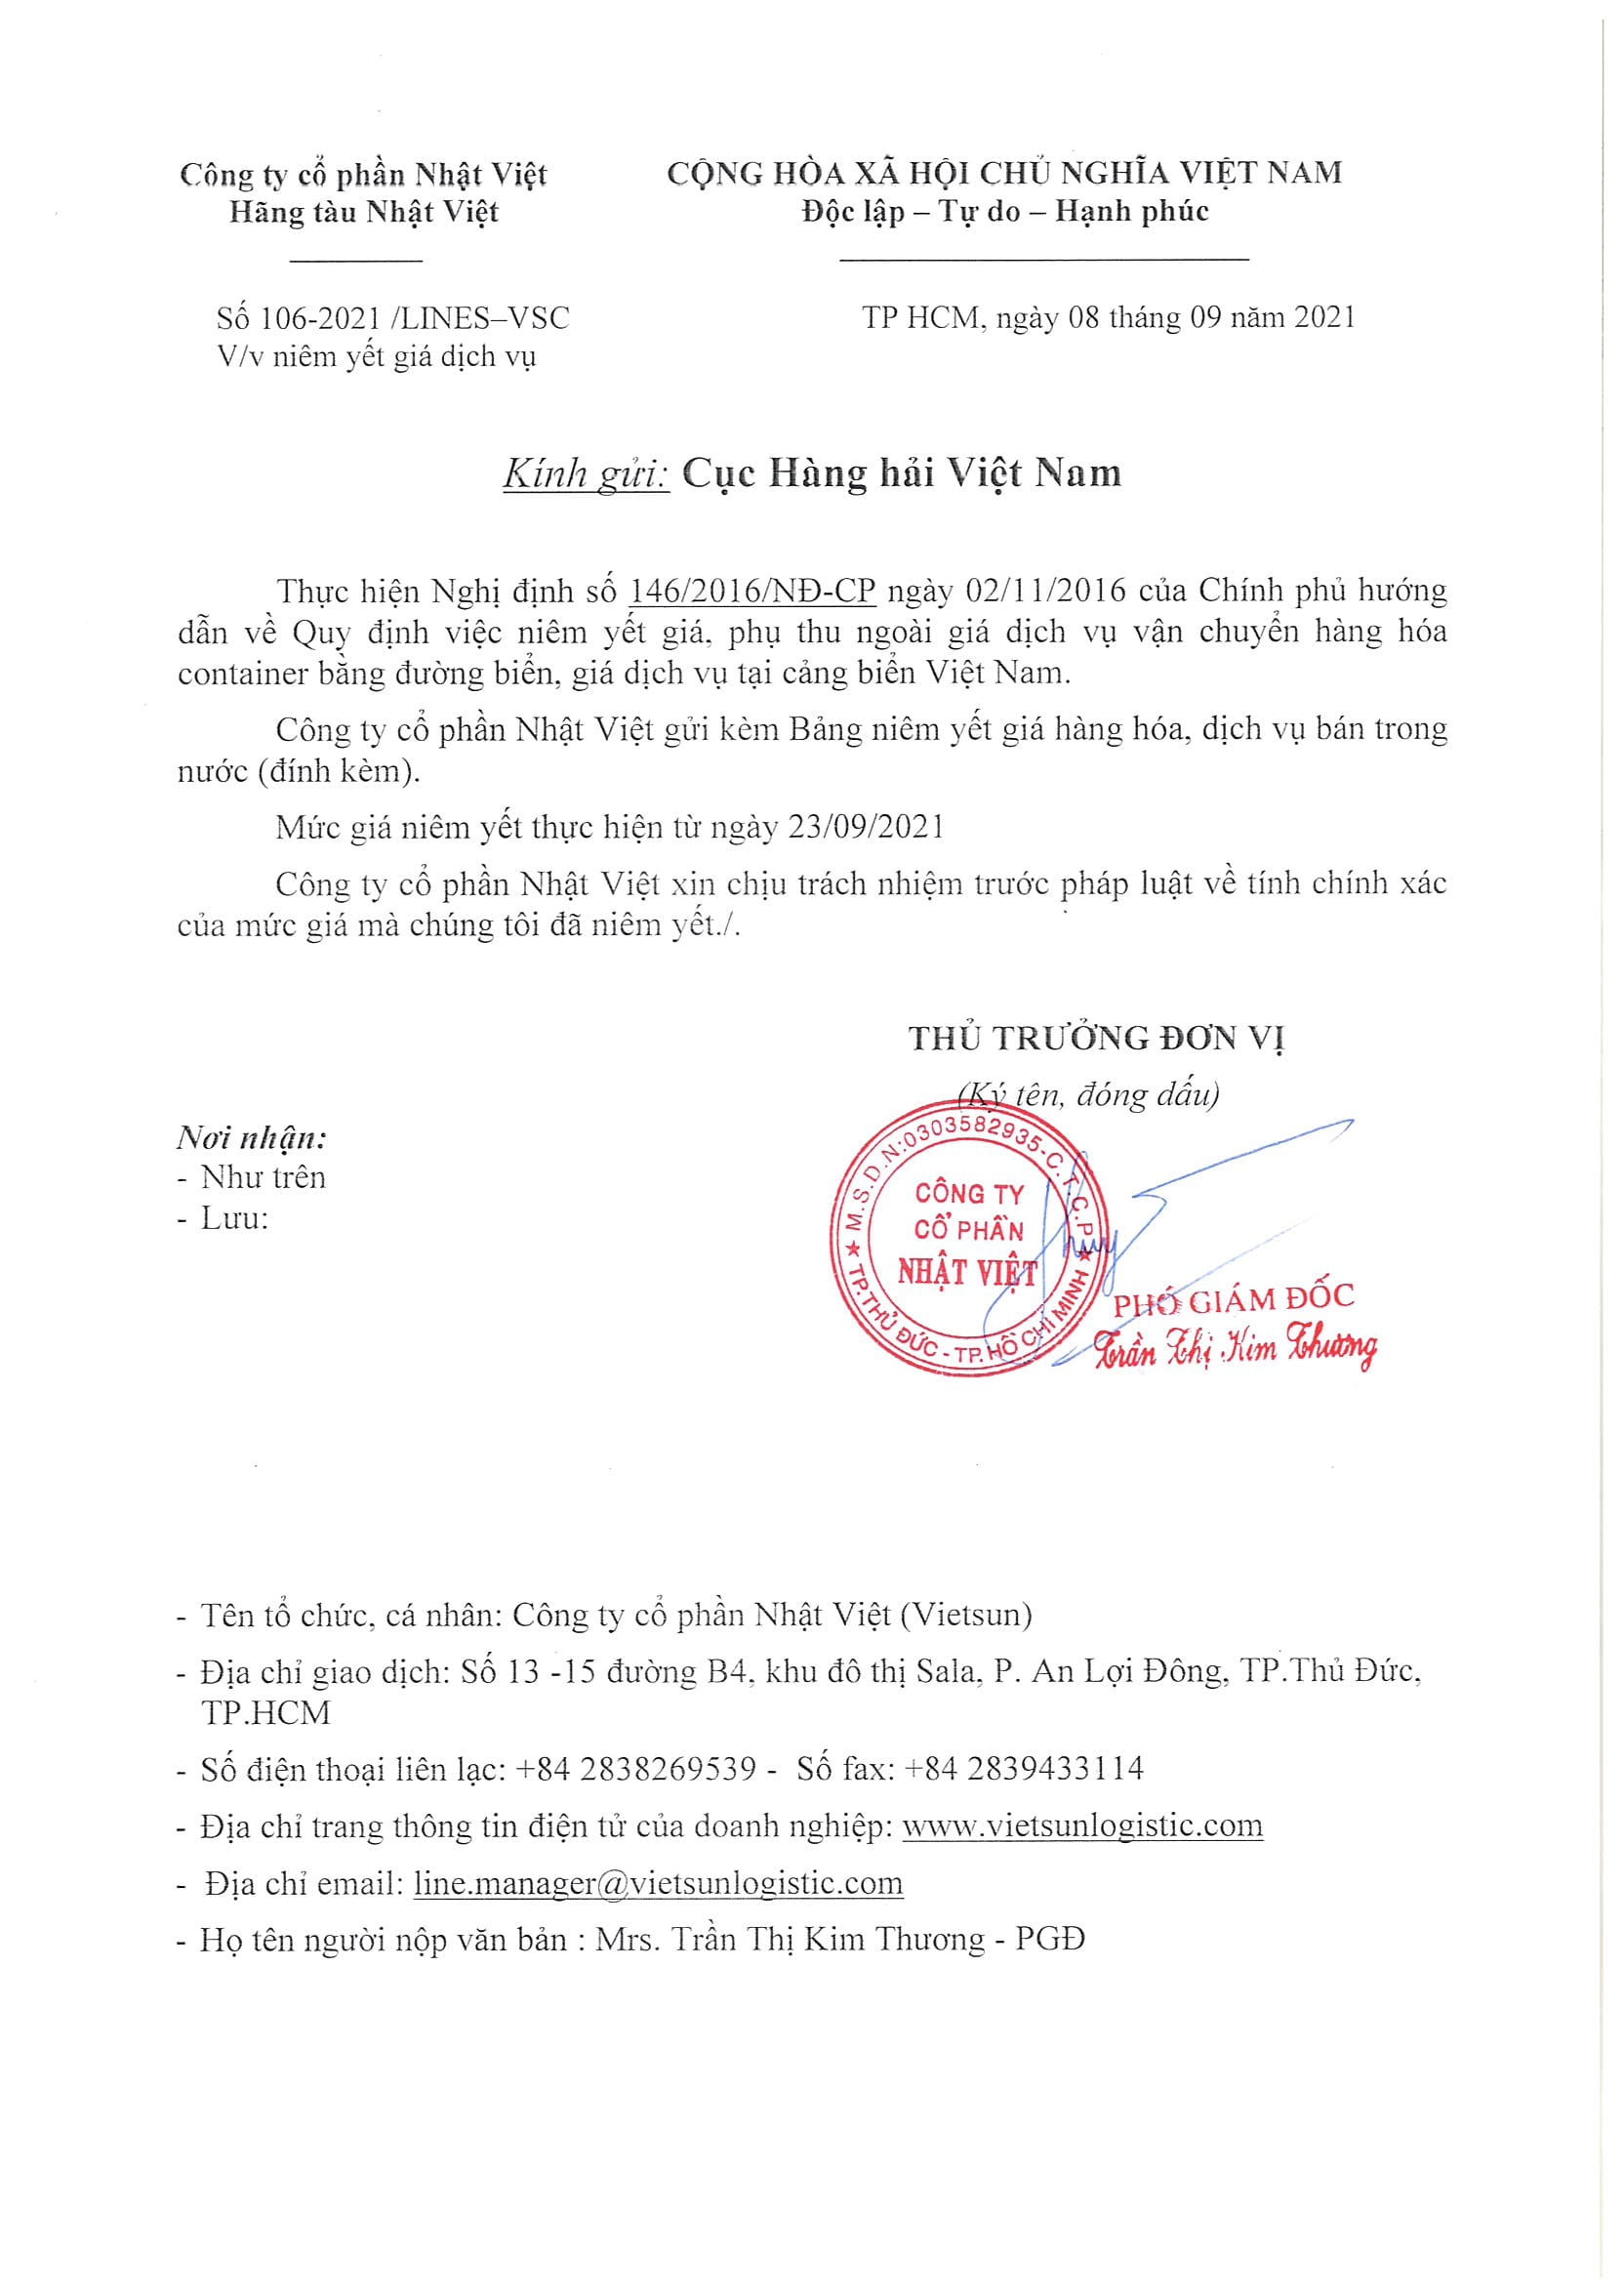 MAU CUC HANG HAI -DANG KY NIEM YET GIA (23-09-2021)-1